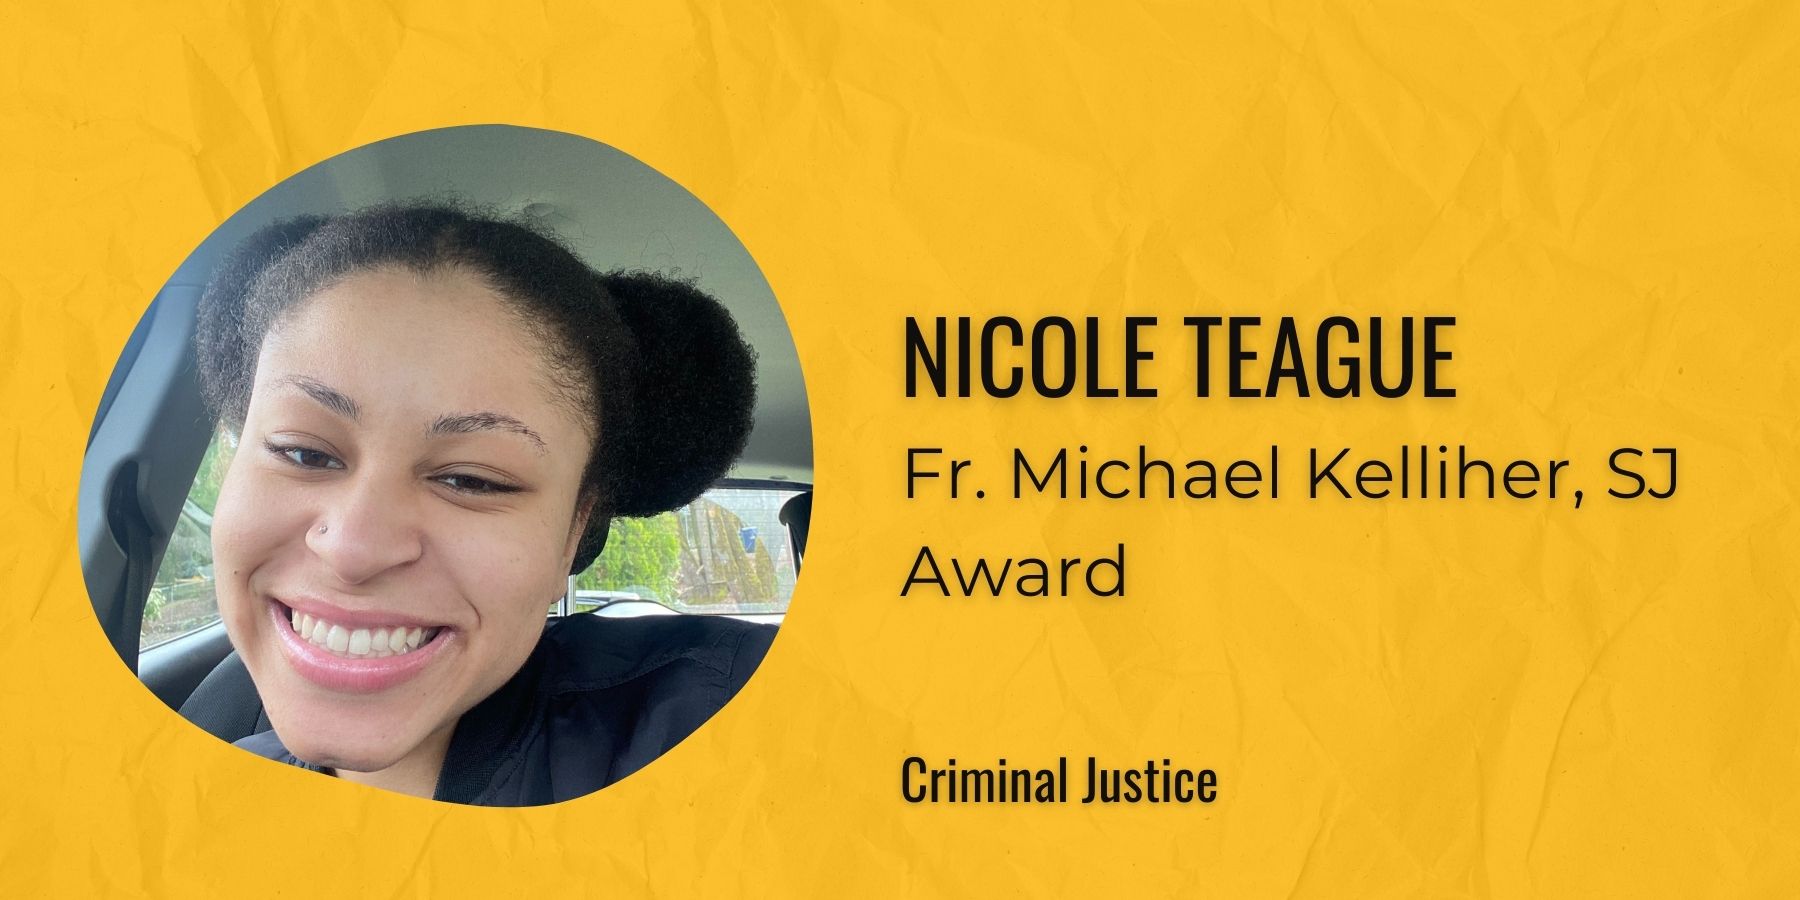 Image of Nicole Teague, Fr. Michael Kelliher, SJ Award, Criminal Justice
